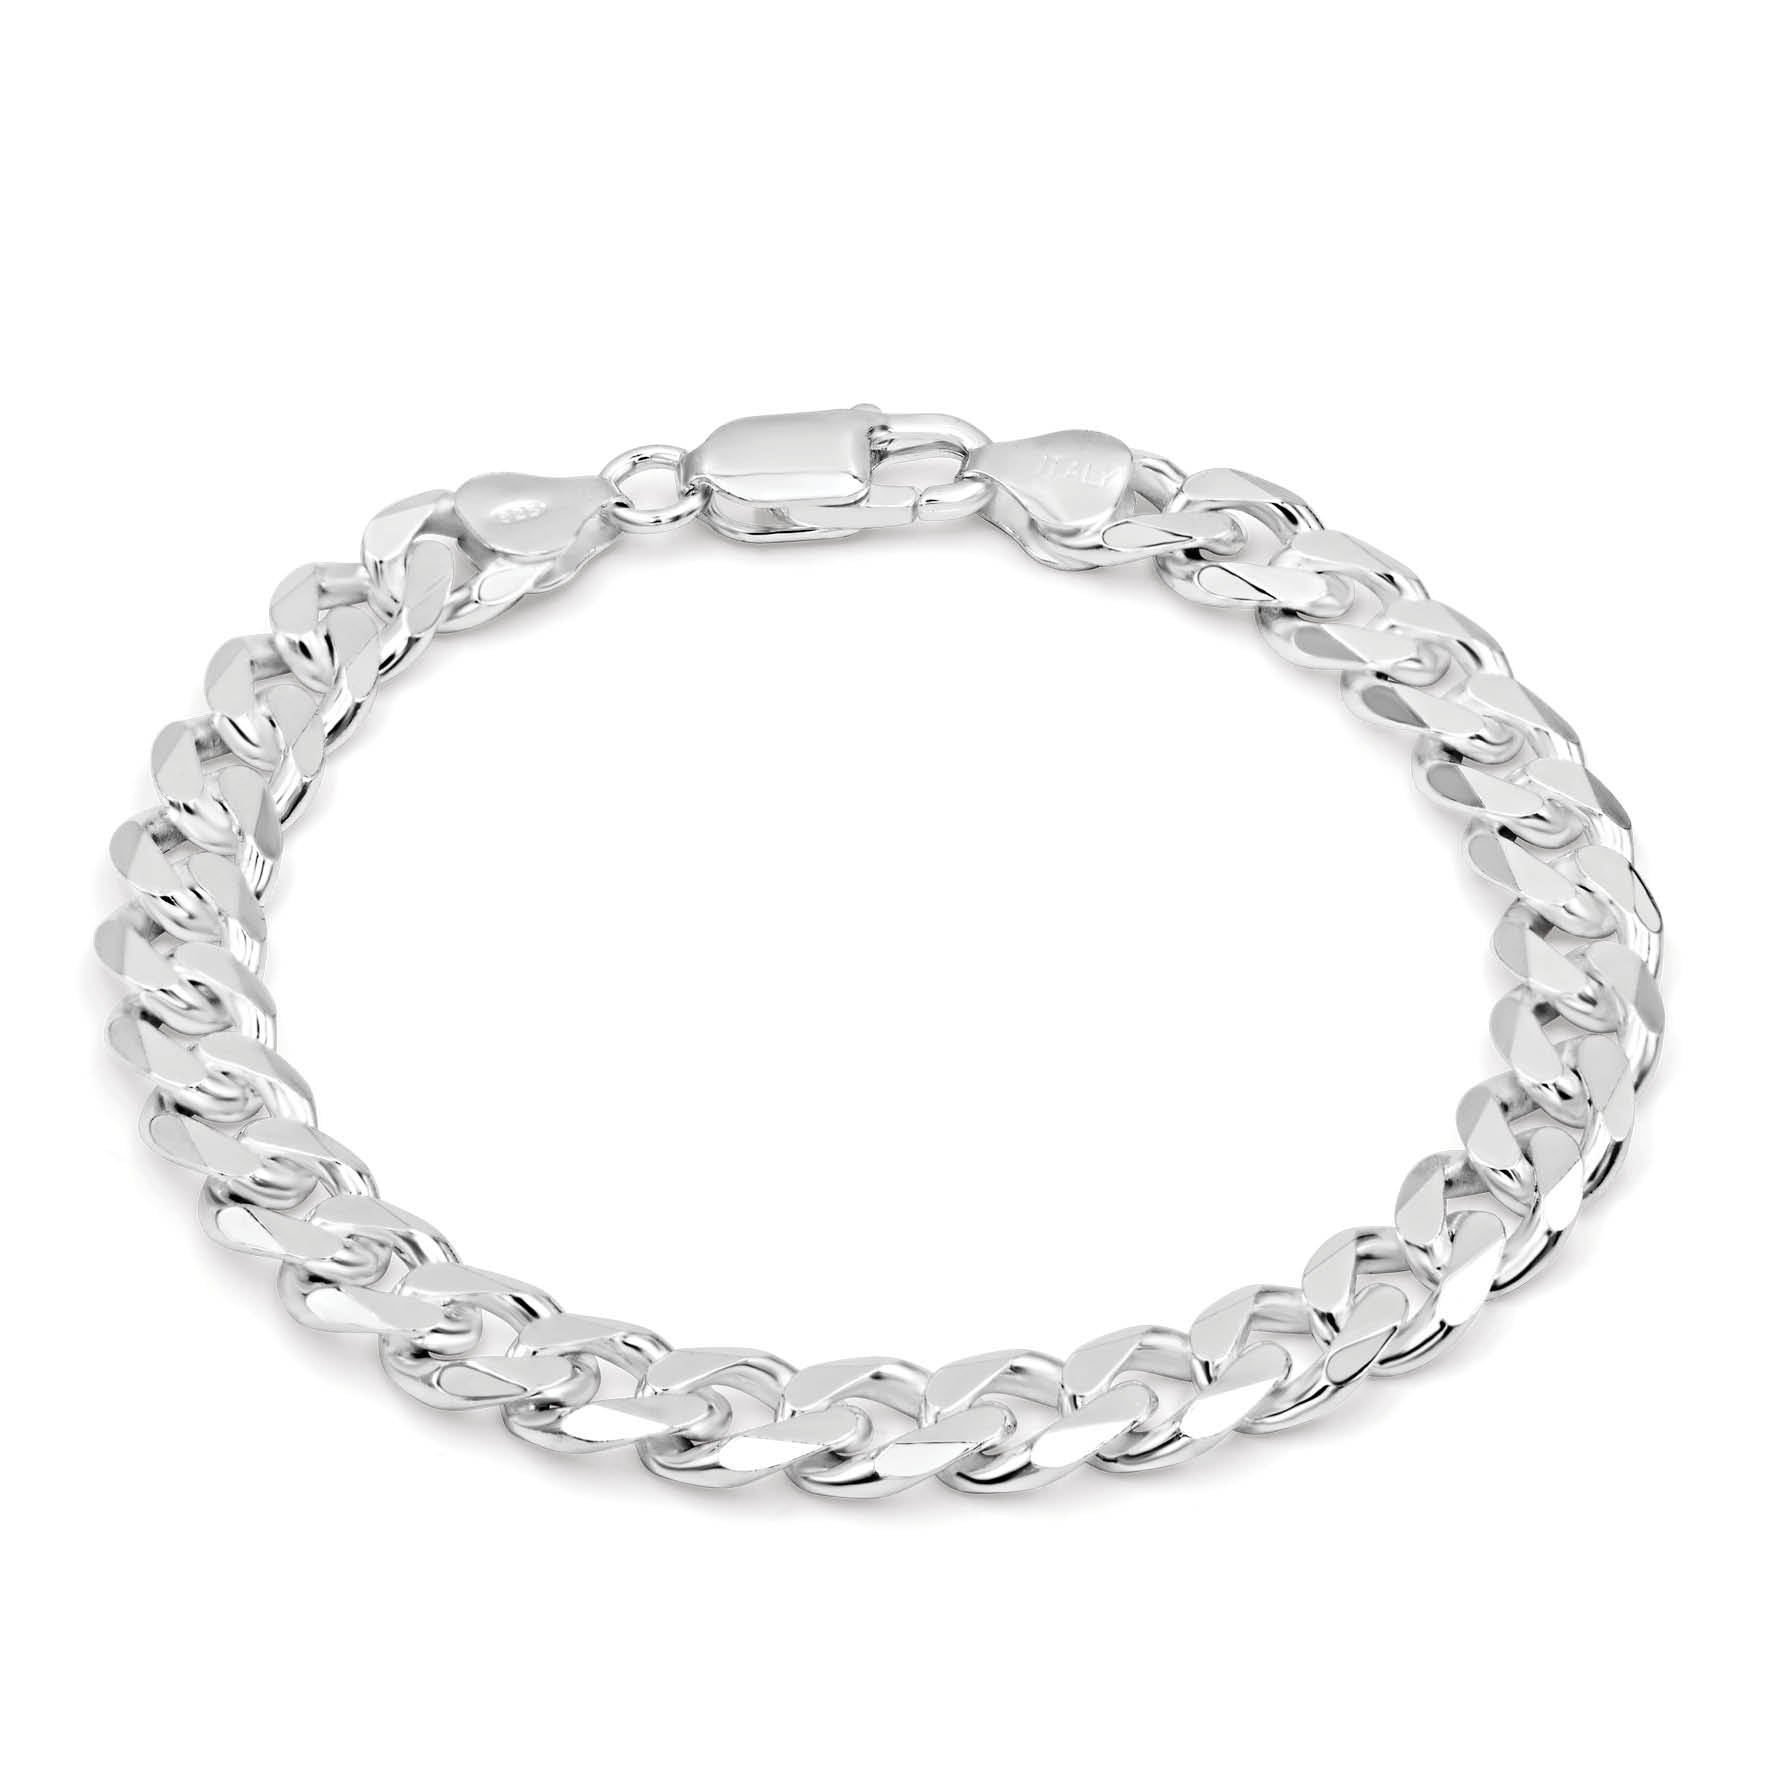 Fine Men's 925 Sterling Silver Jewelry-8MM Cuban Curb Link Anklet Bracelet